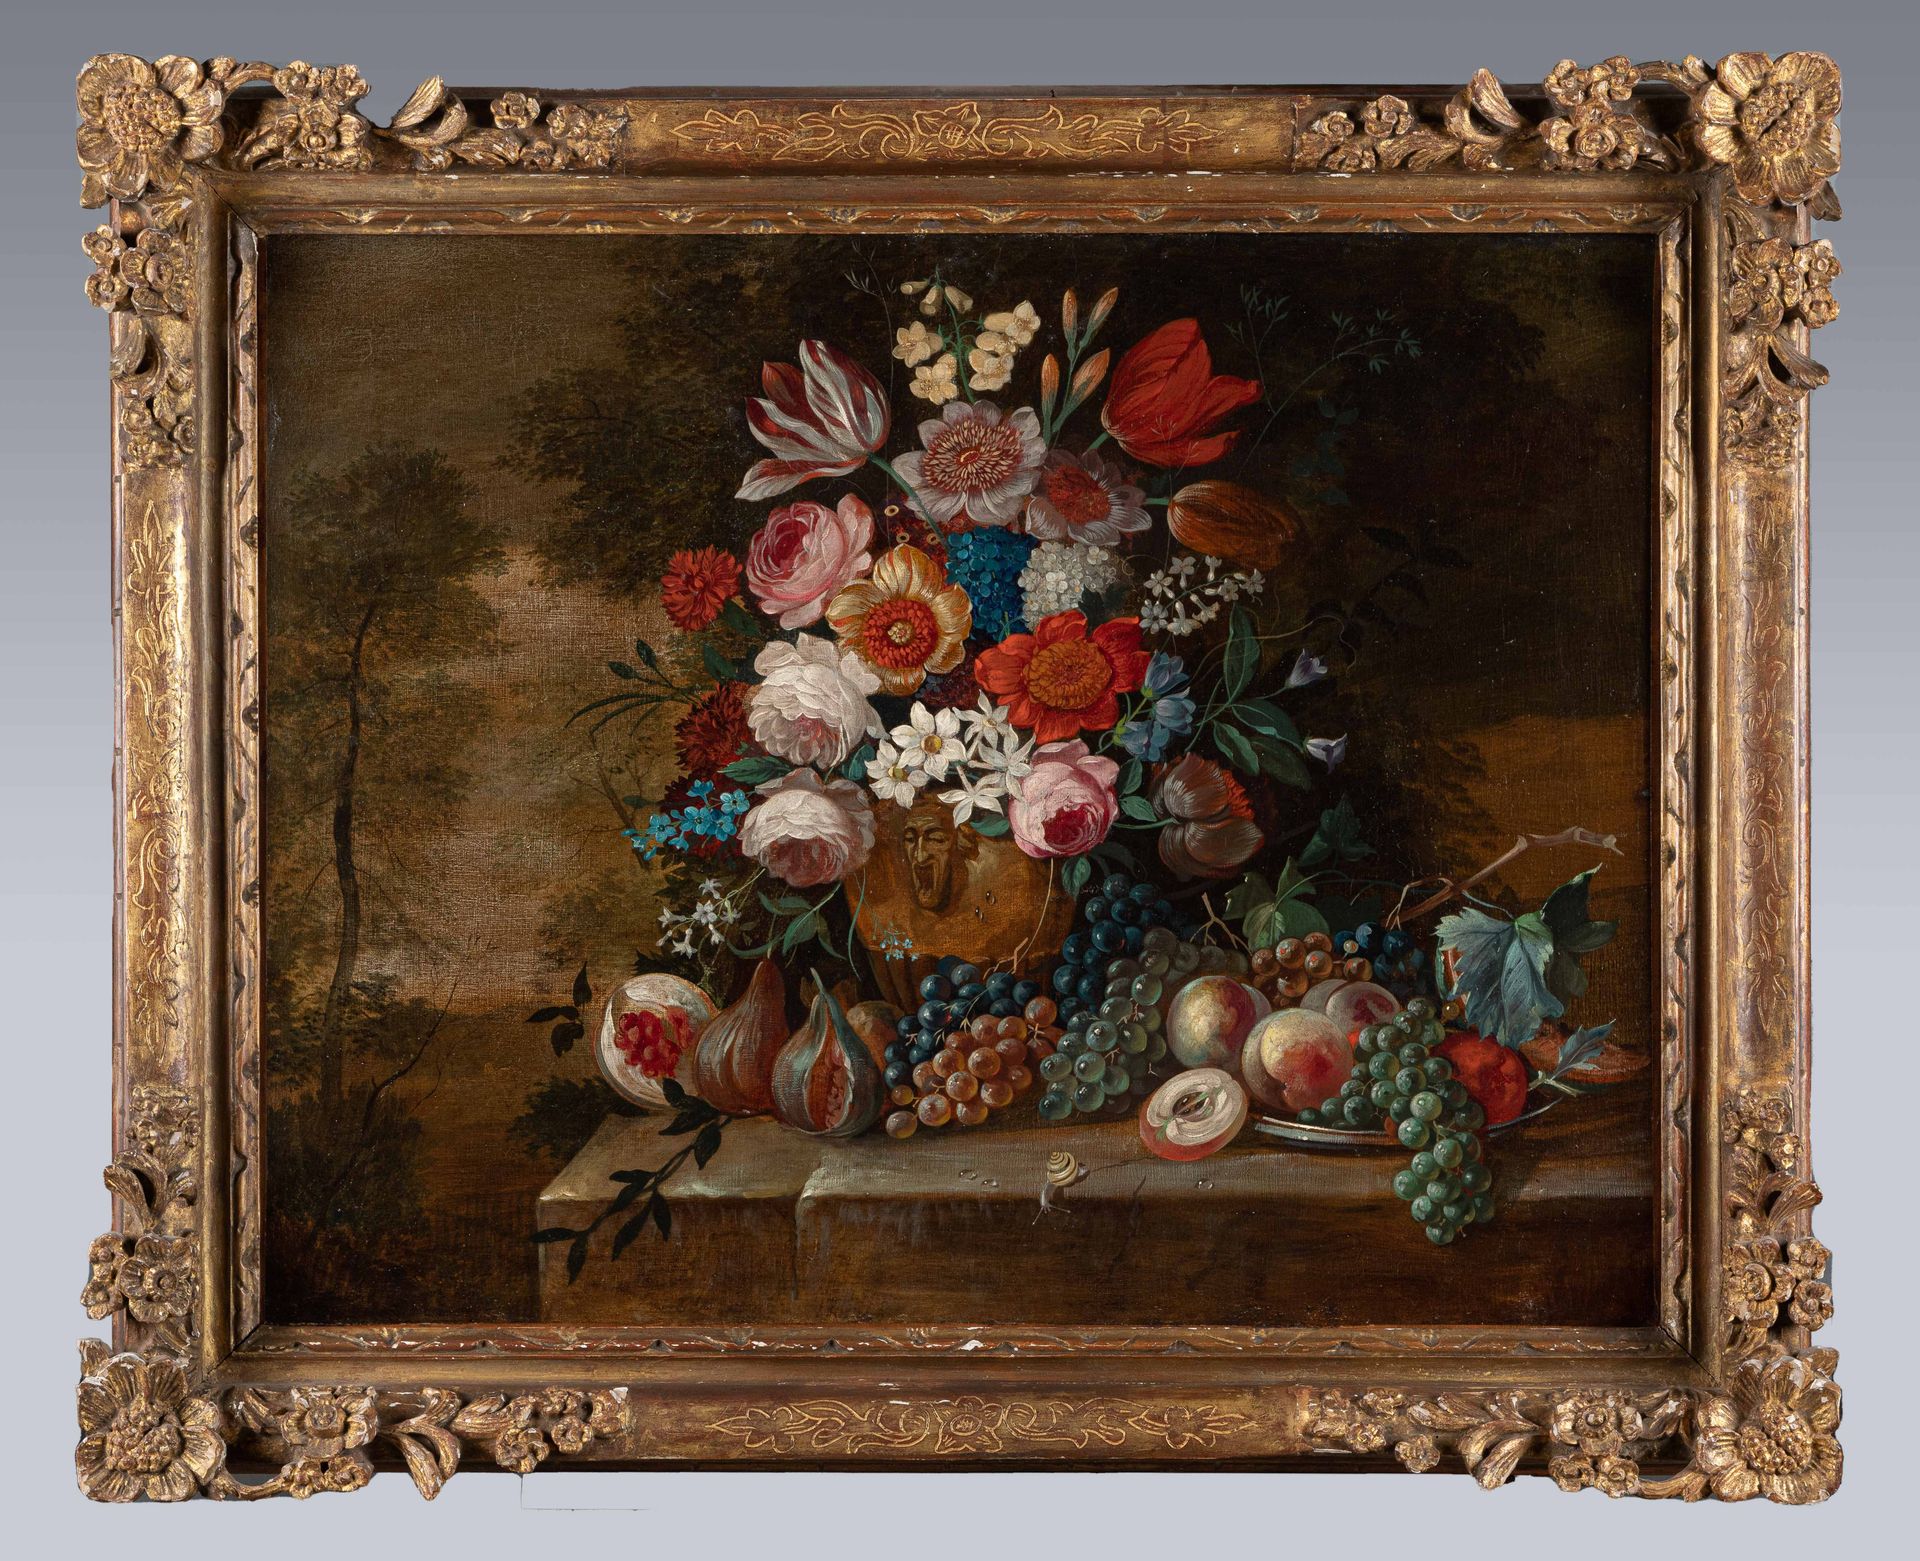 Null 17世纪风格的荷兰学校
花卉和水果的静物画
一对布面油画
70 x 90厘米。雕刻和镀金的木框